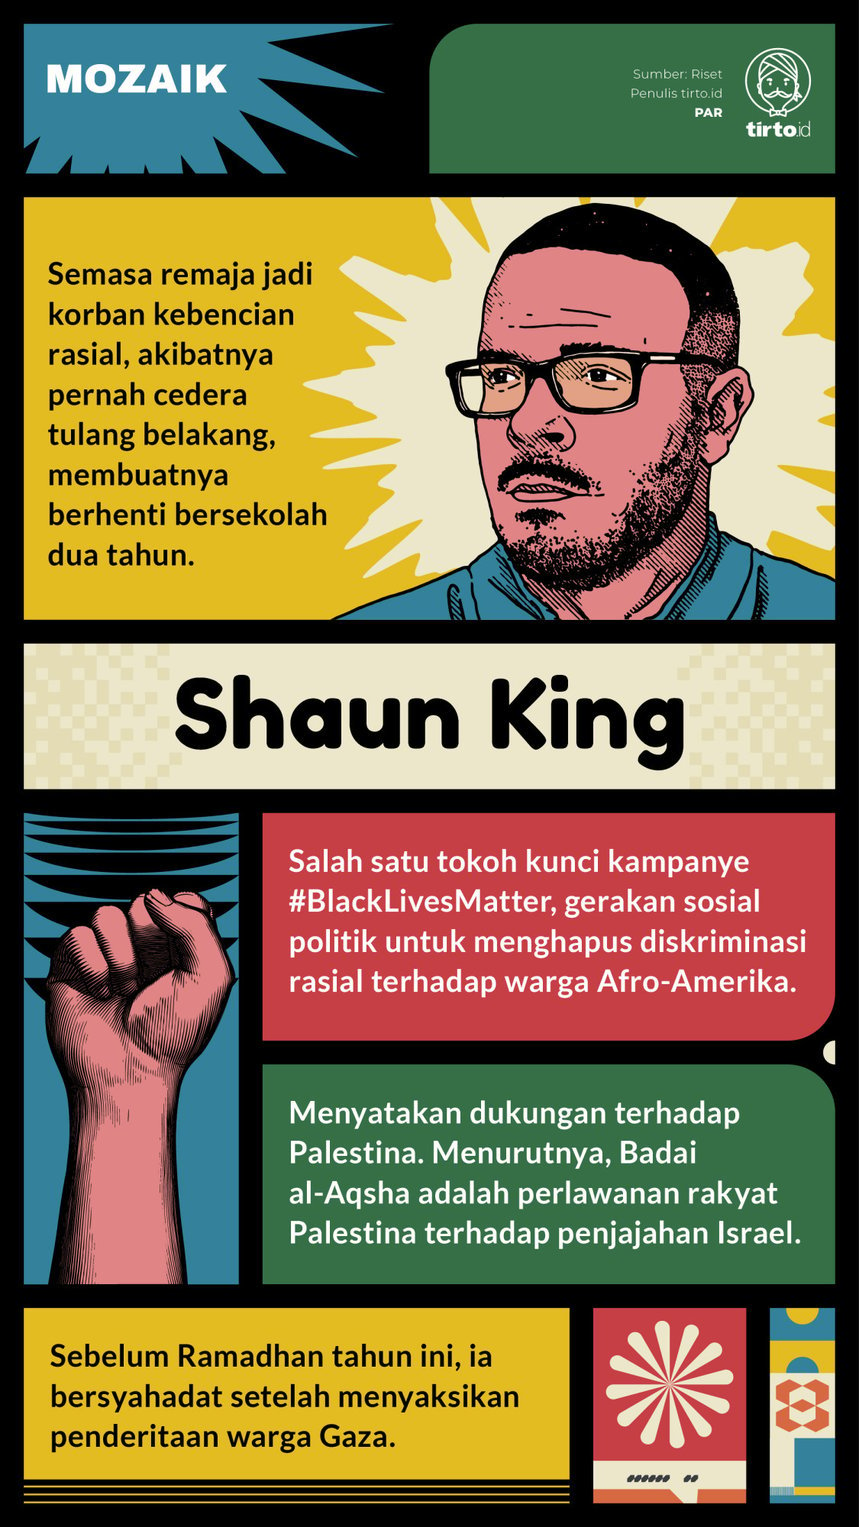 Infografik Mozaik Shaun King